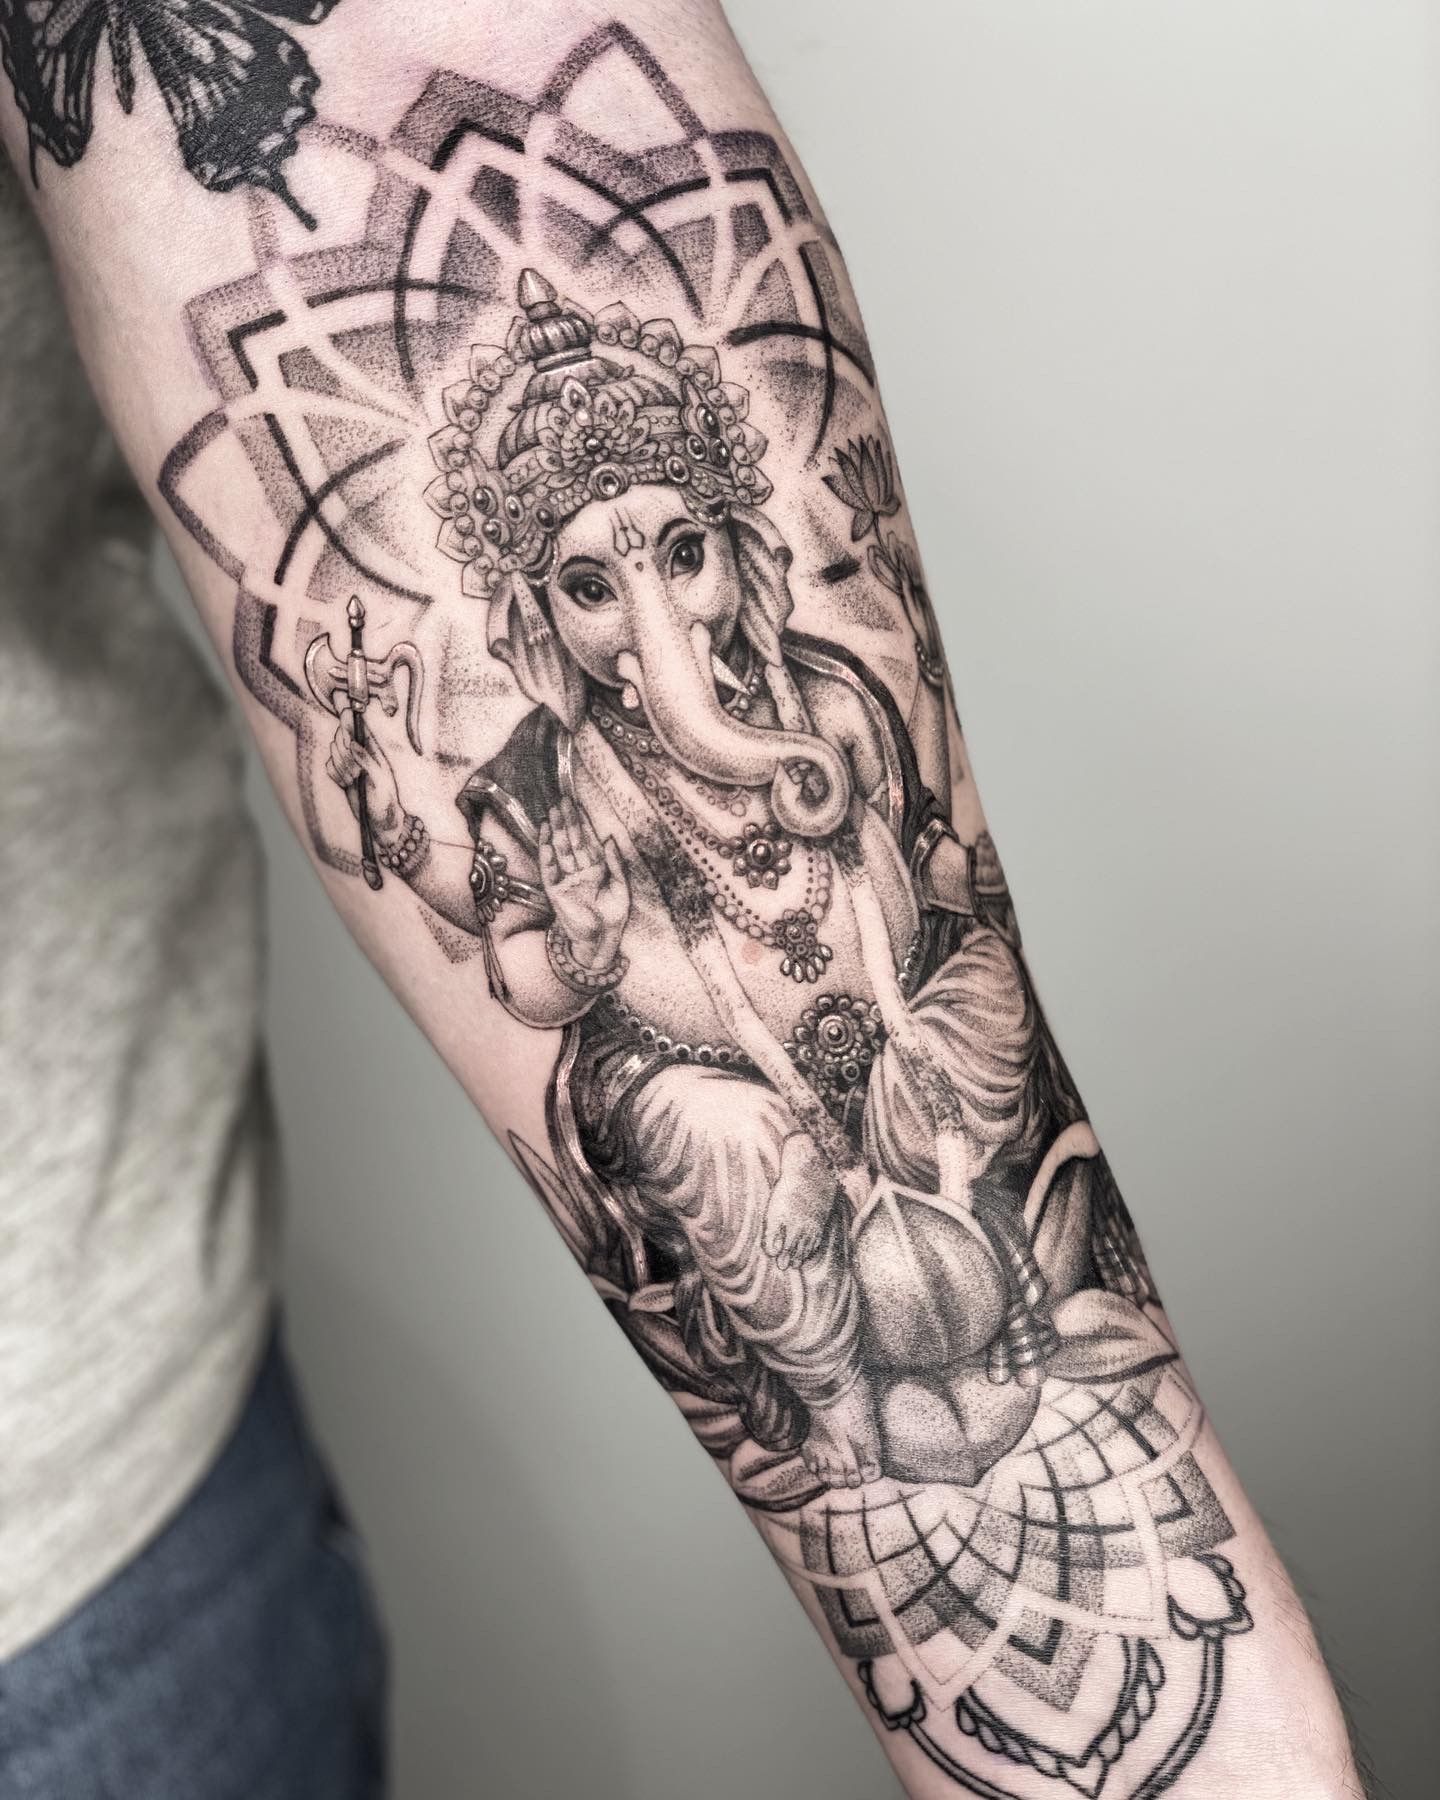 Ganesha Tattoo by blindthistle on DeviantArt